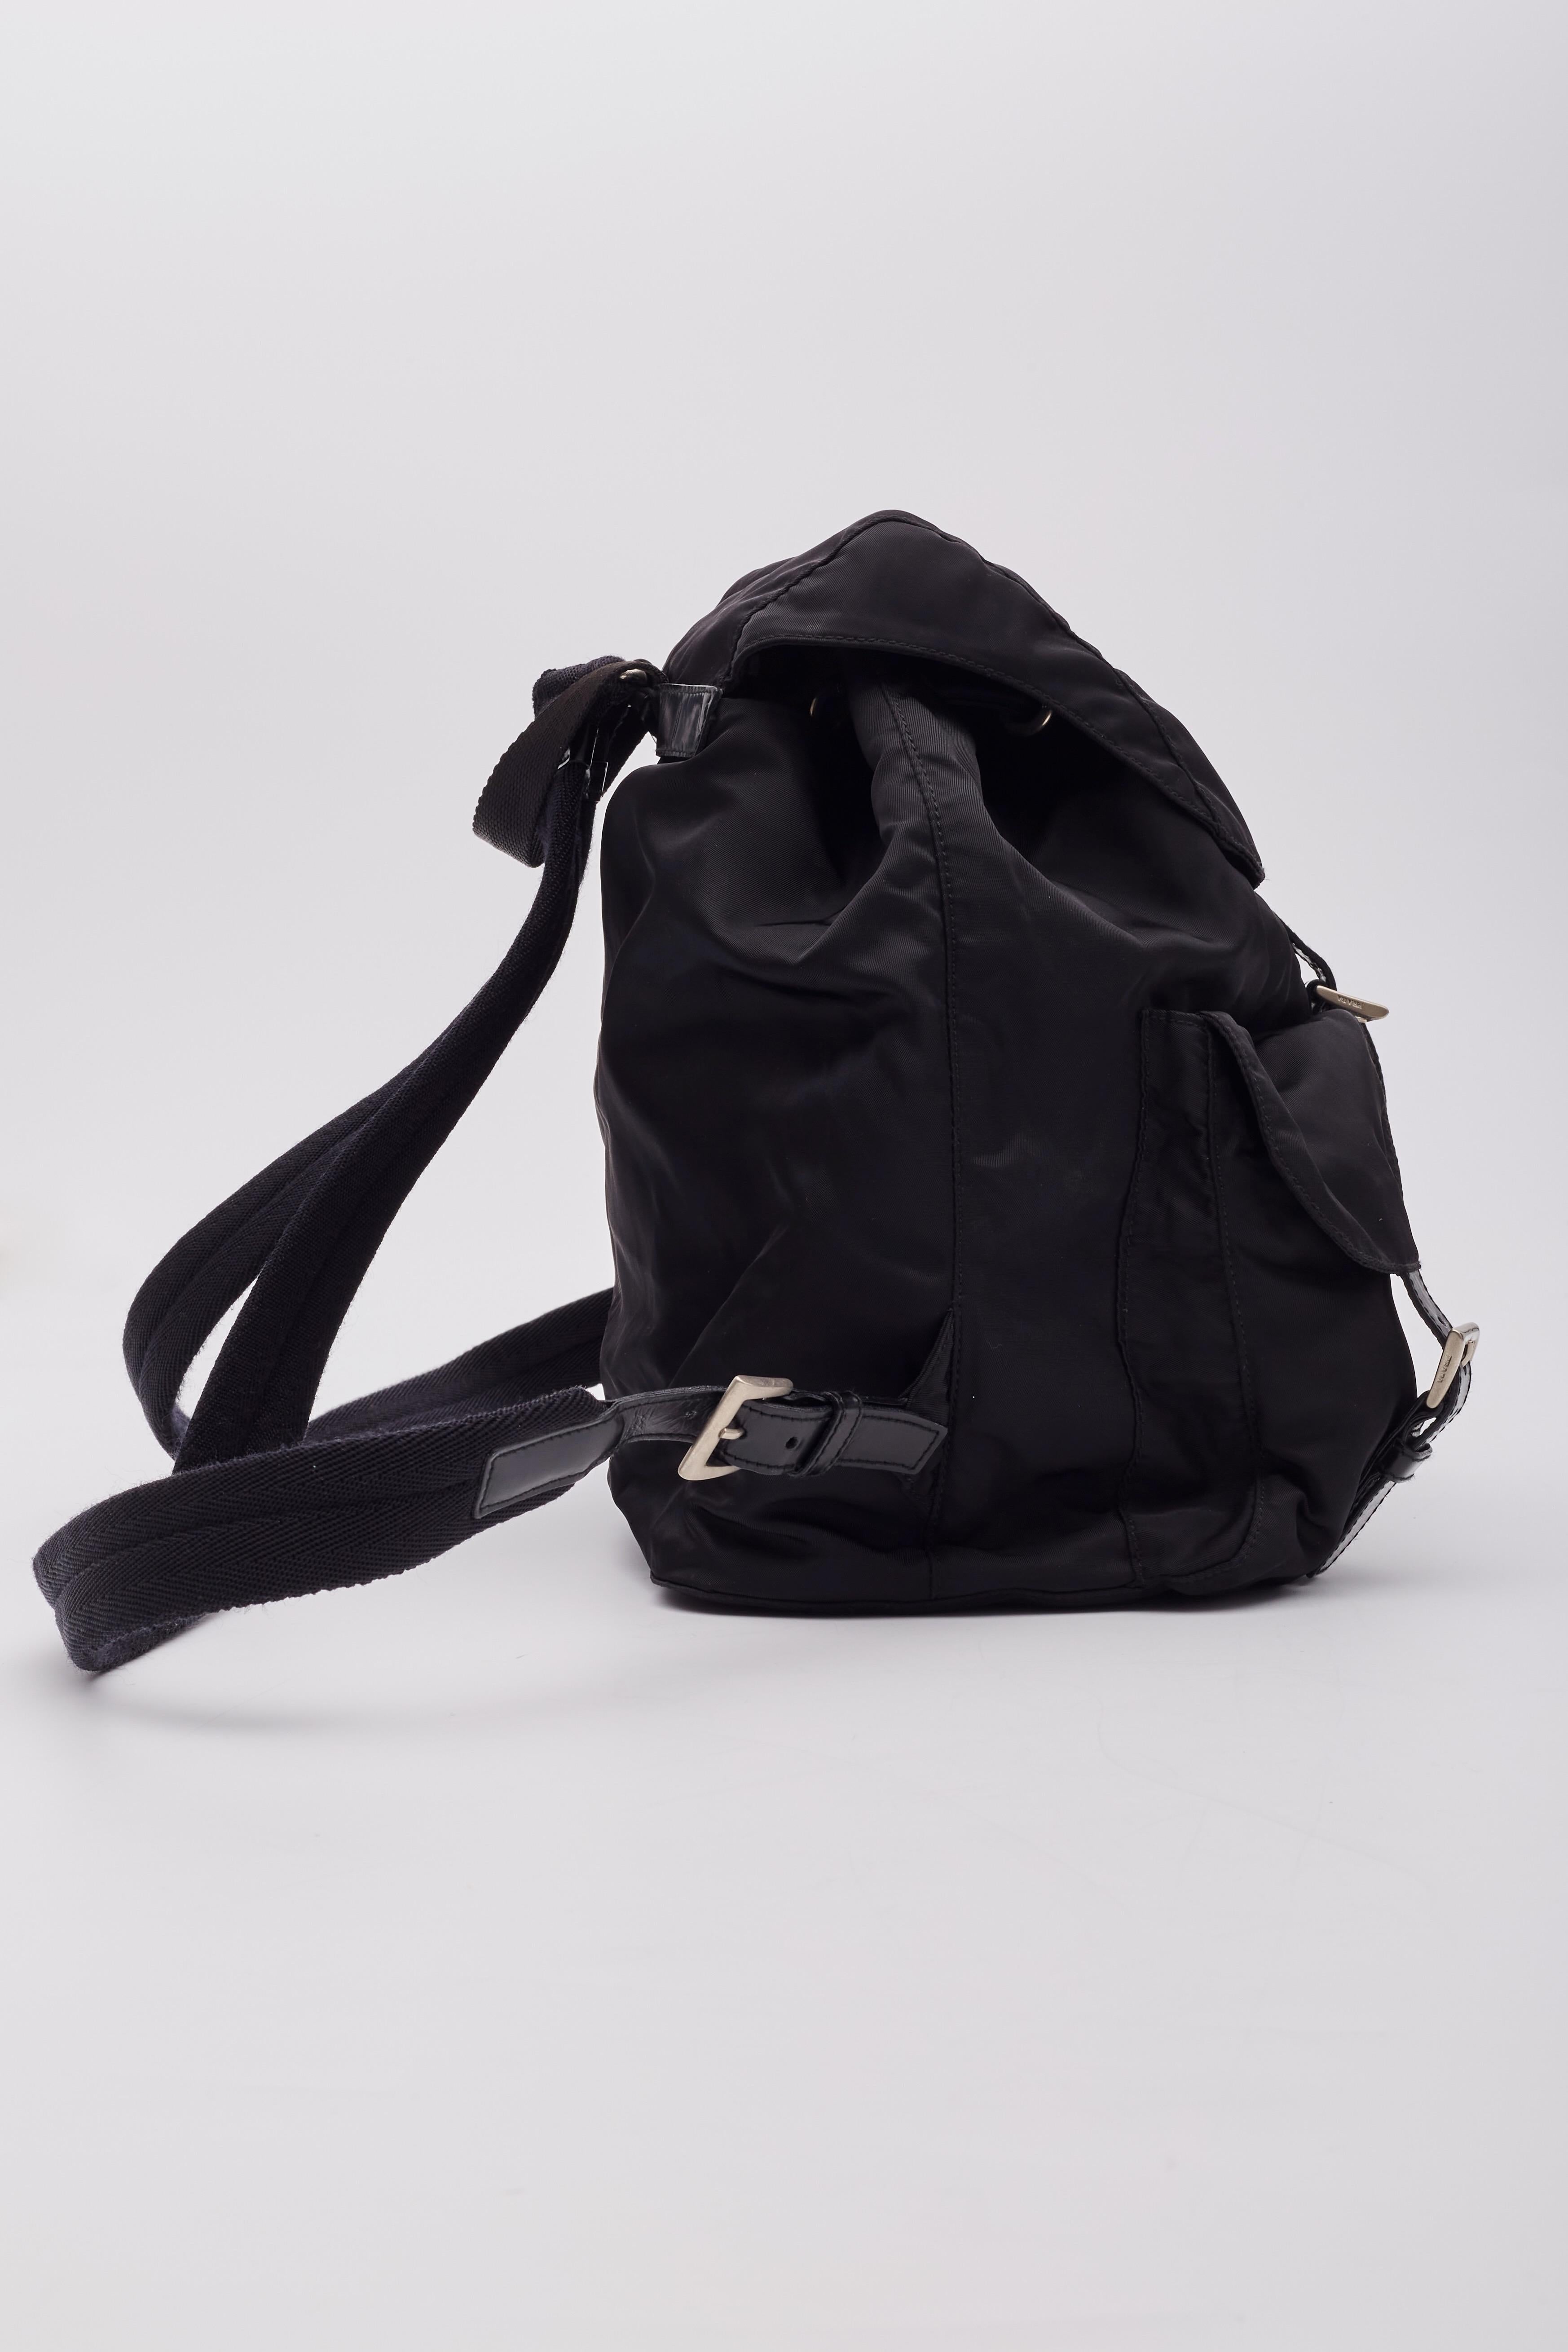 Prada Vintage Black Nylon Tessuto Two Pocket Backpack For Sale 2